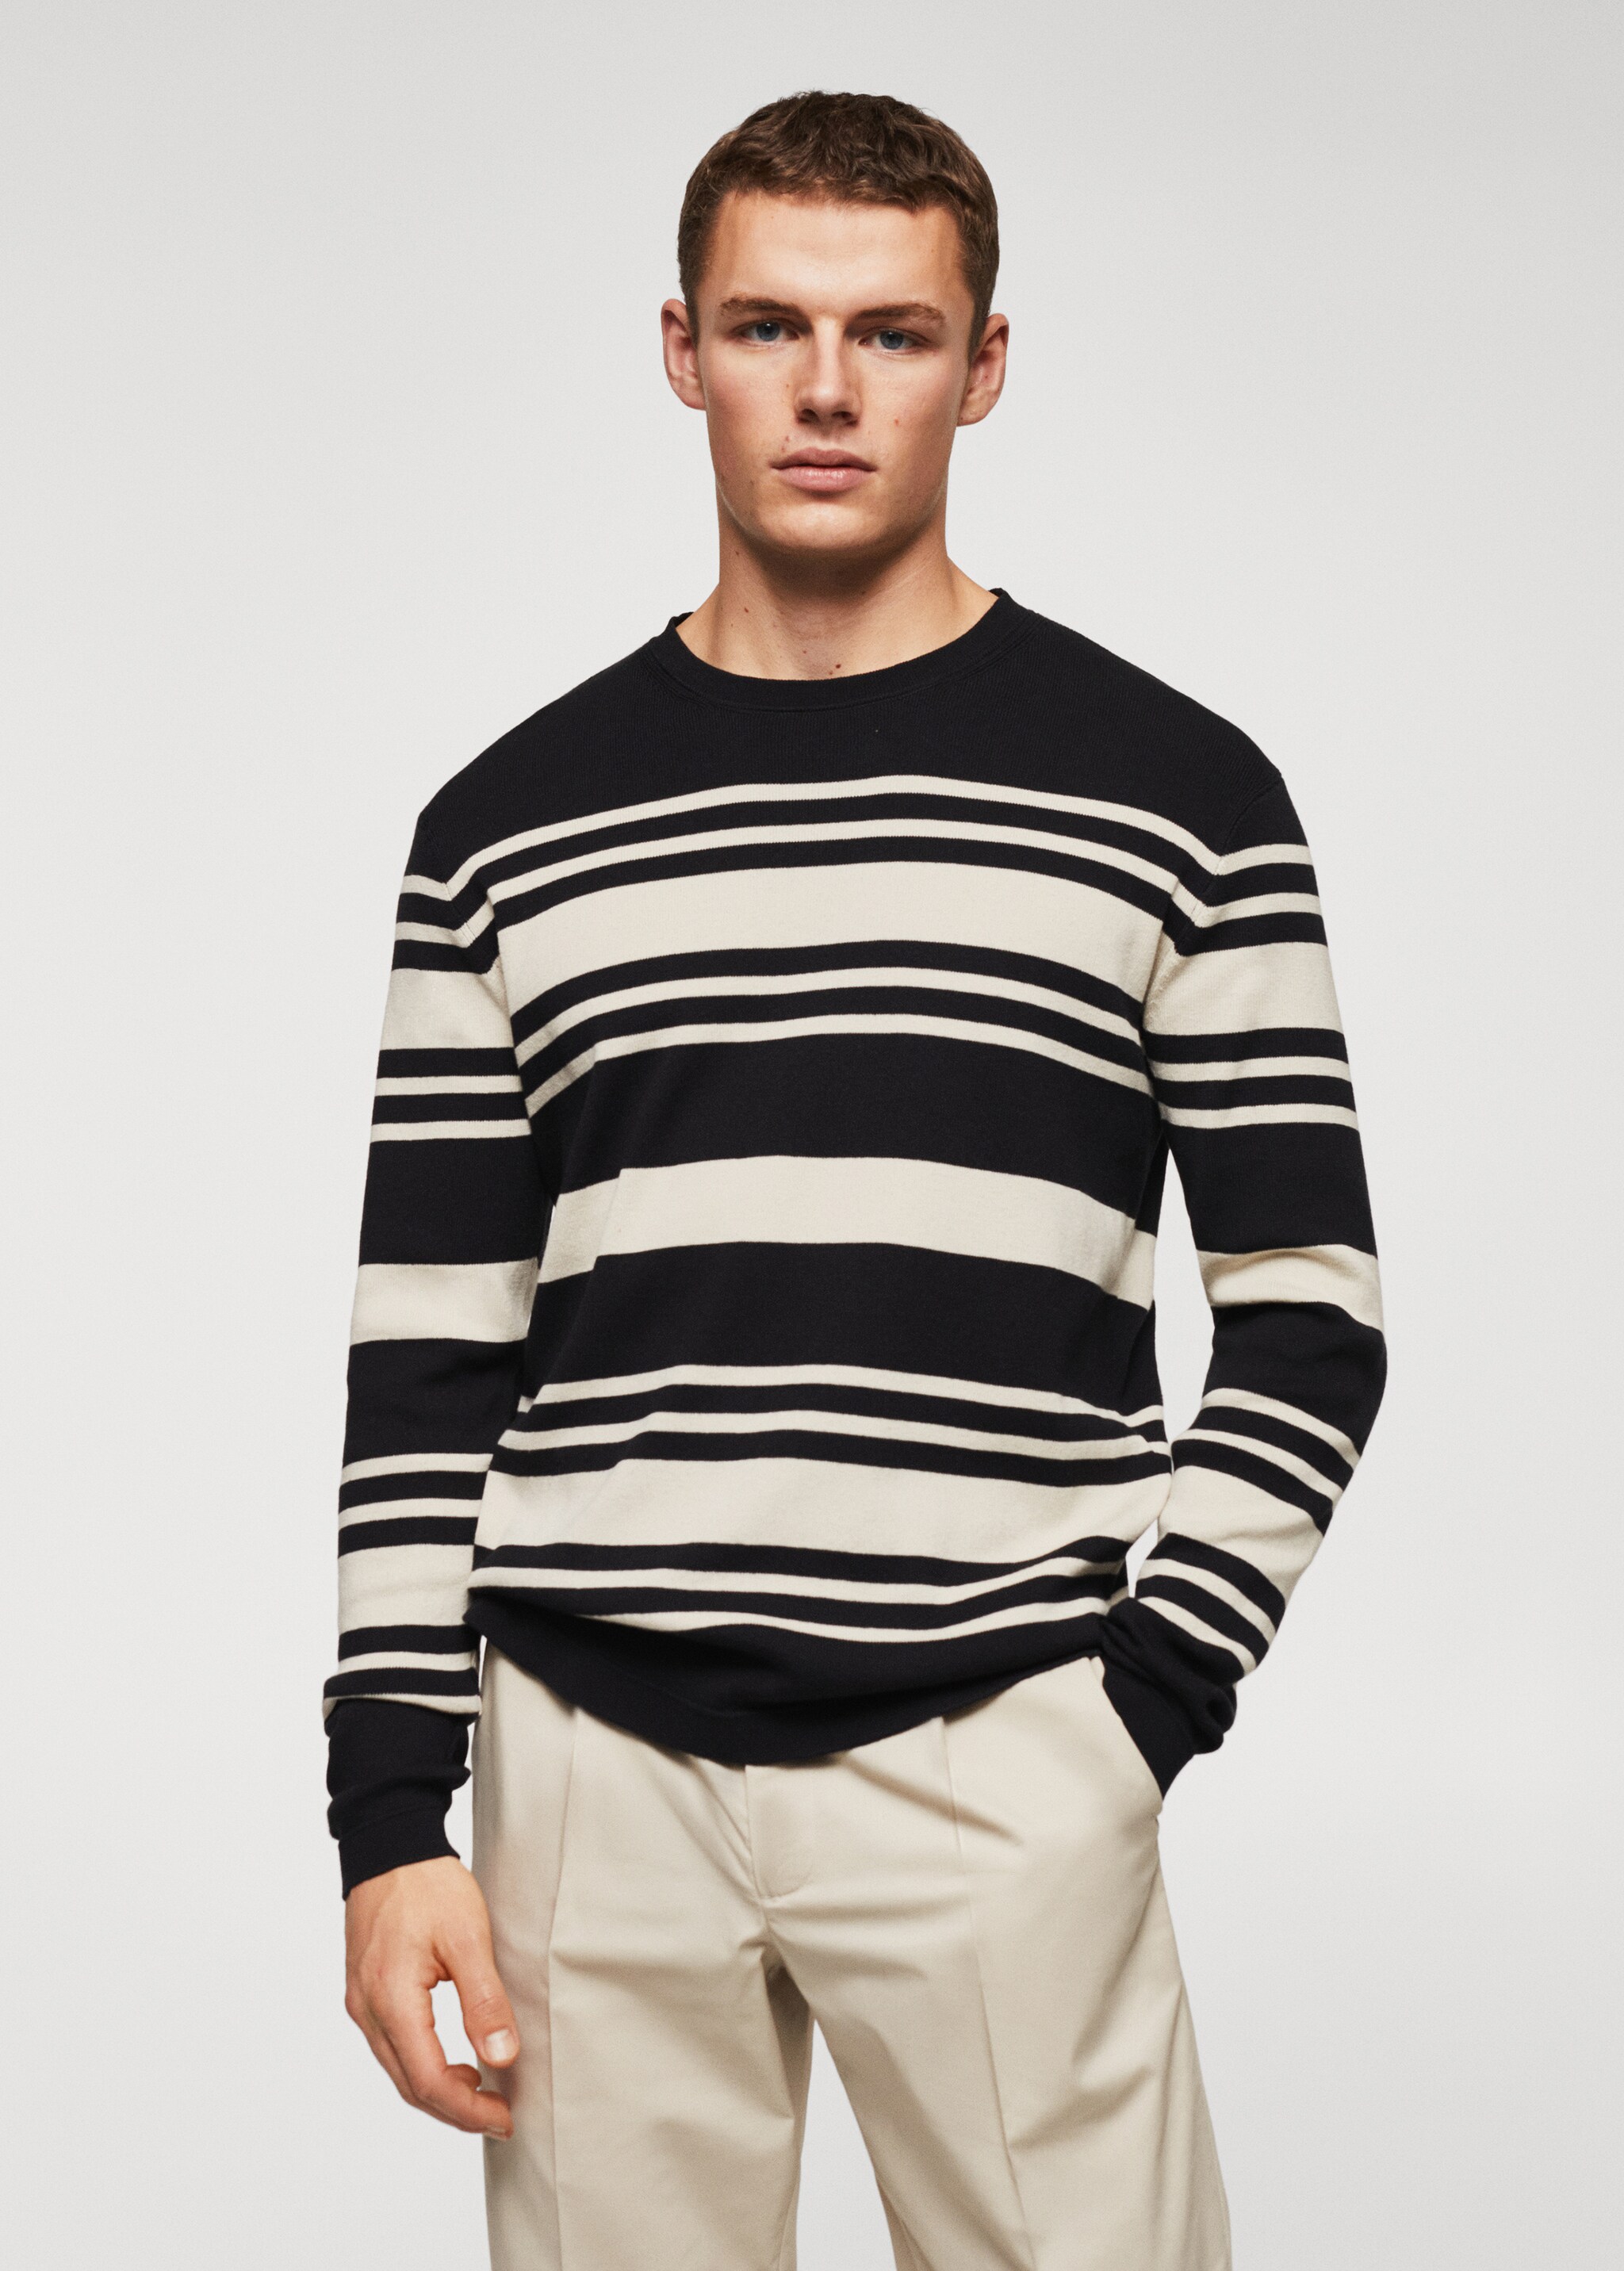 Striped cotton sweater - Plan mediu